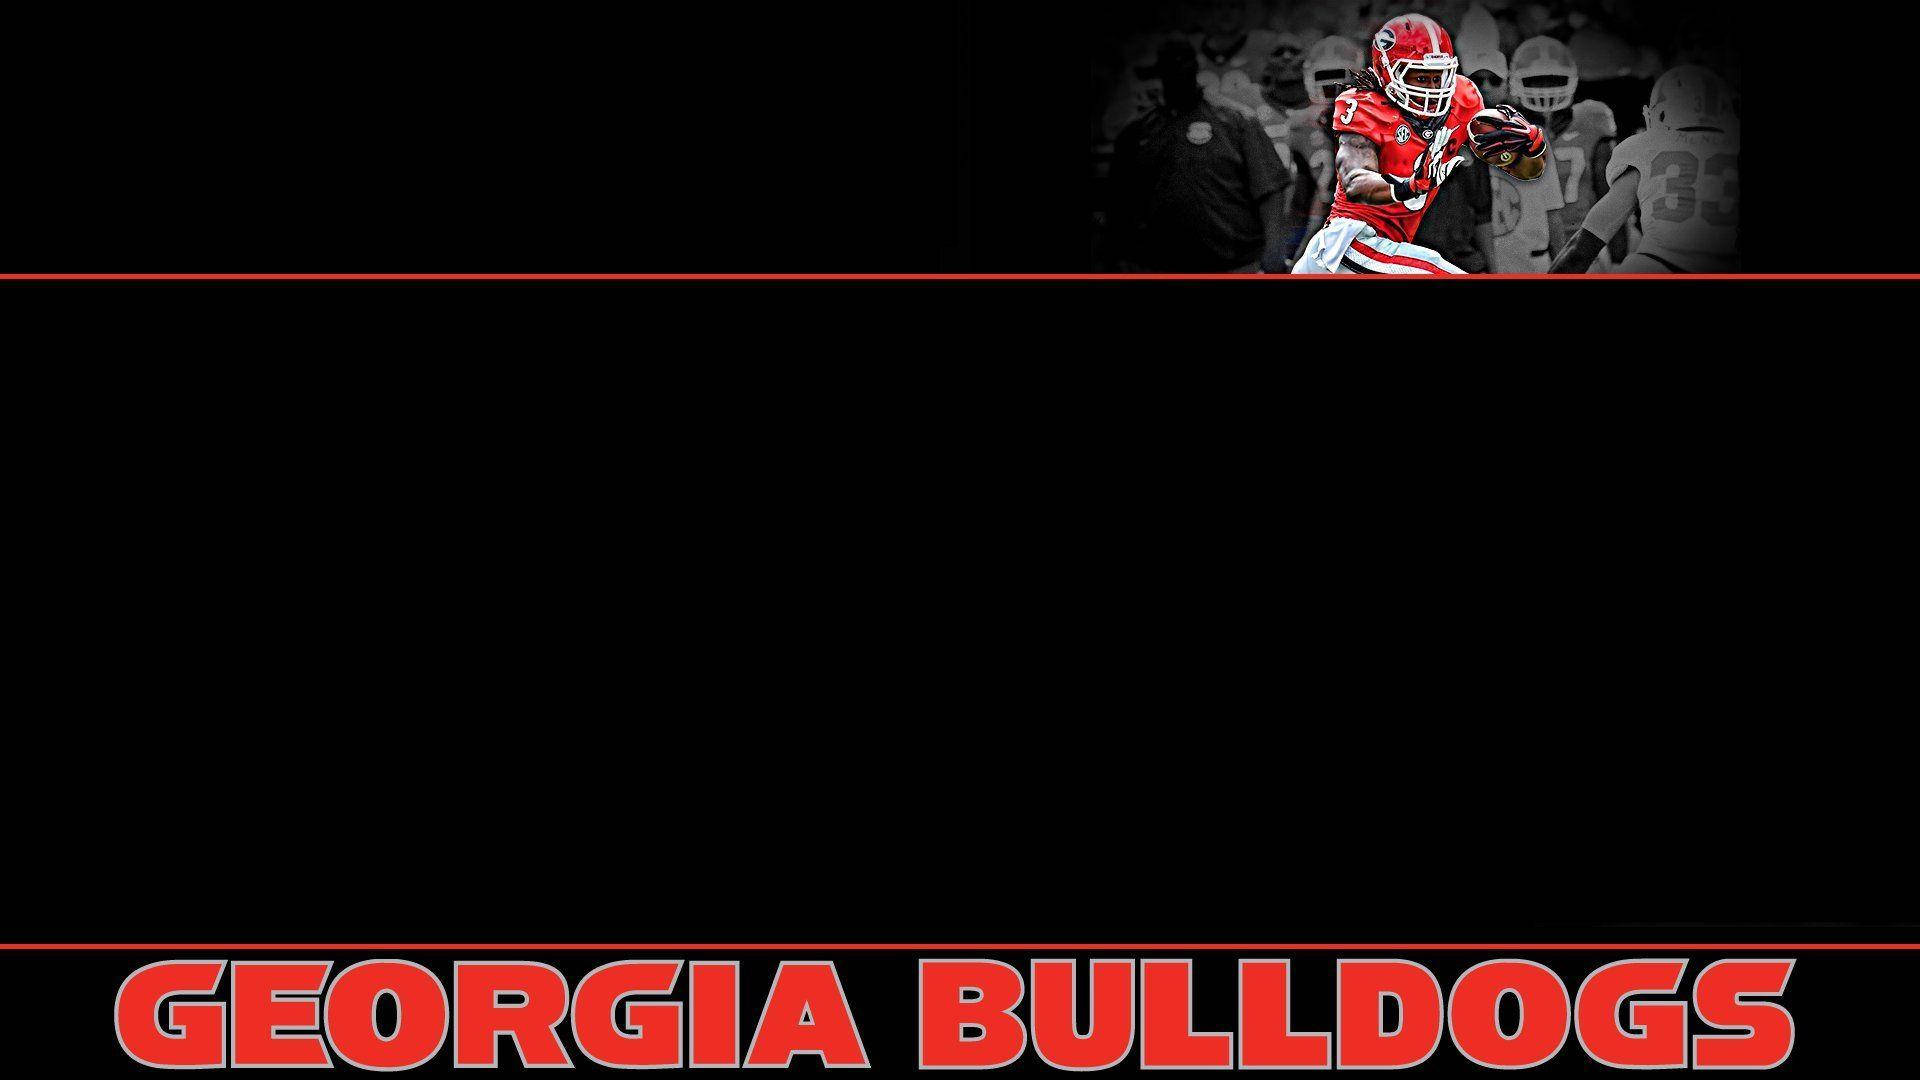 Georgia Bulldogs 1920X1080 Wallpaper and Background Image